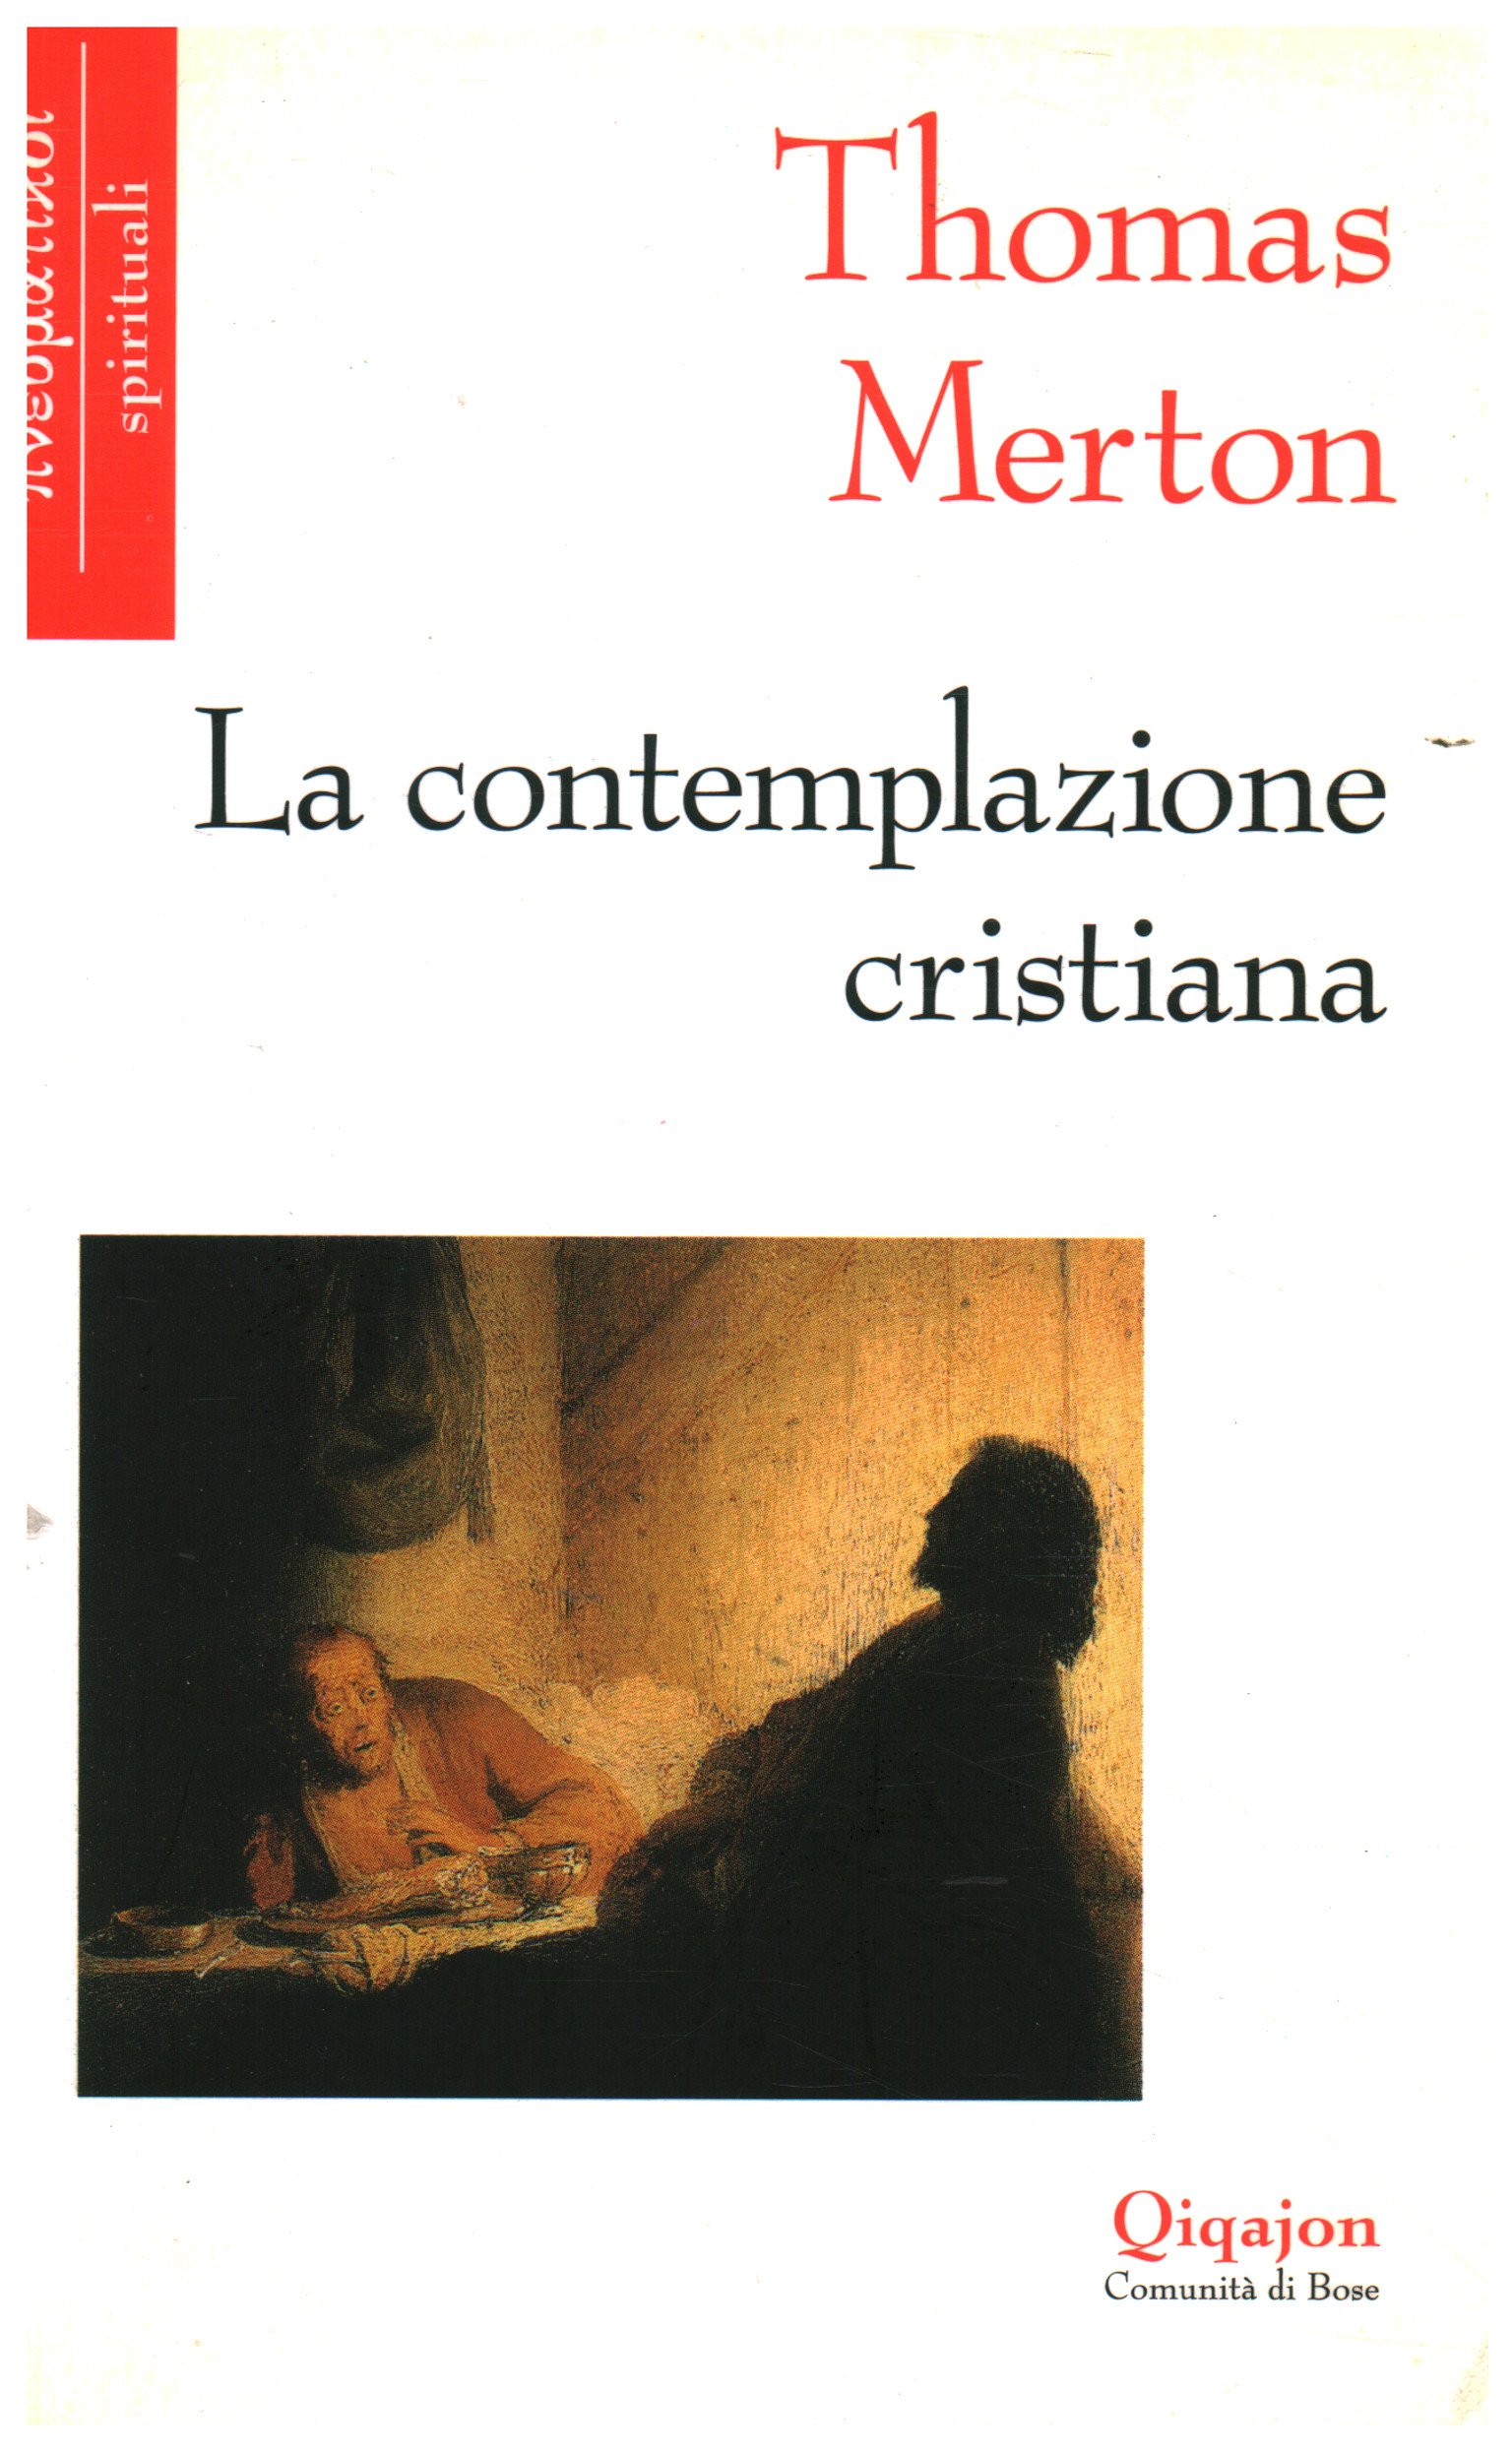 Christian contemplation, Thomas Merton